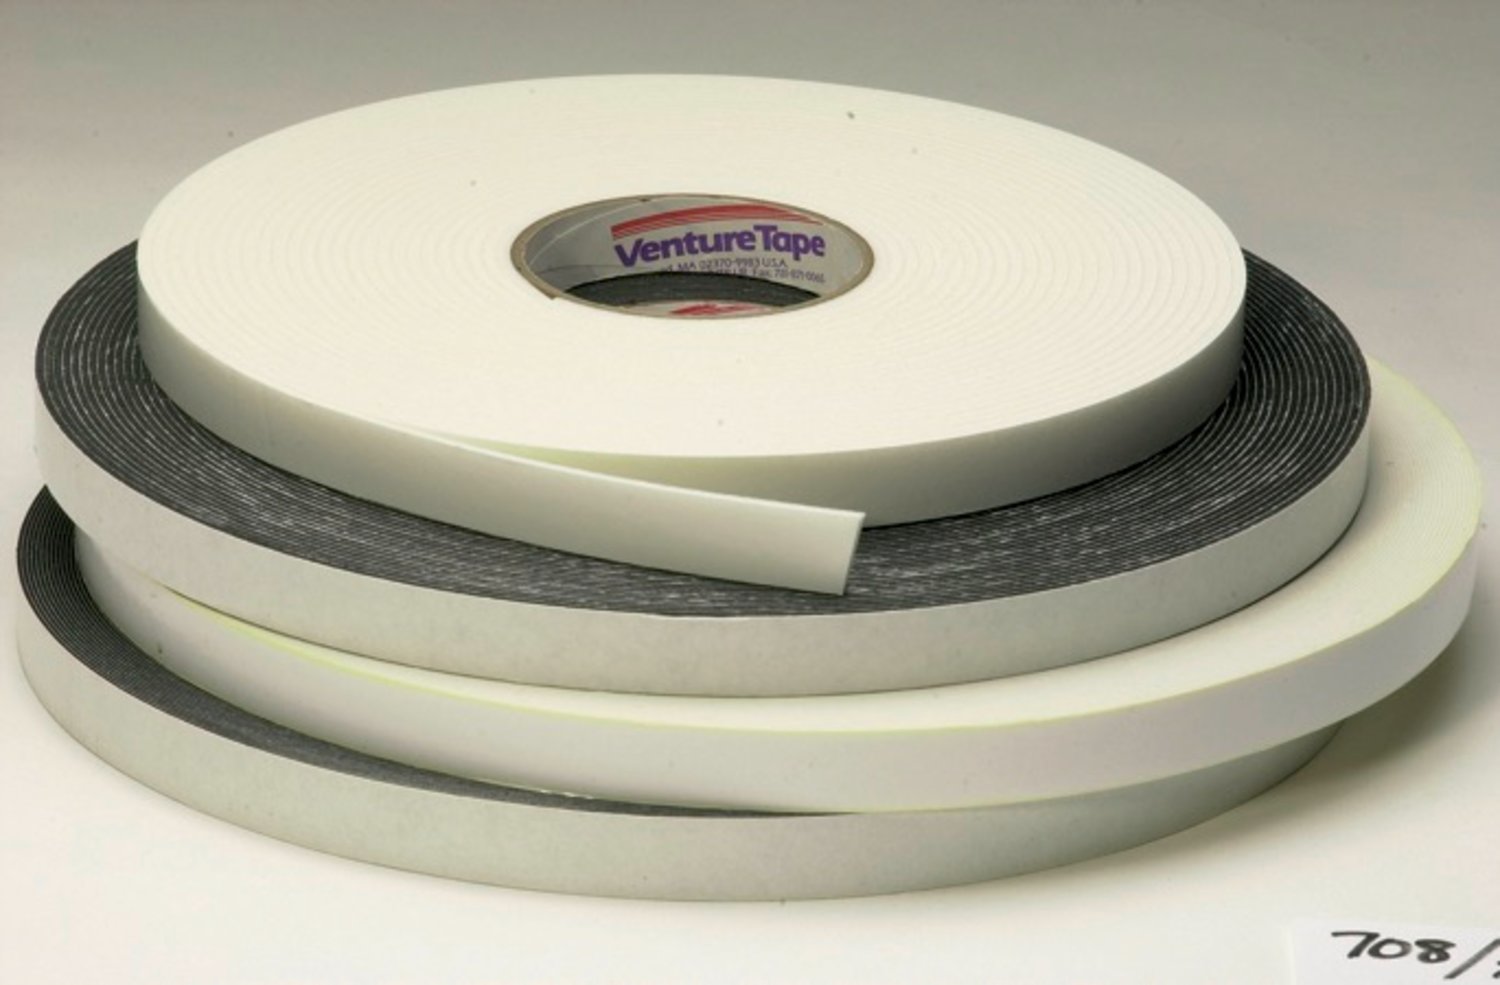 7010292856 - 3M Venture Tape Double Sided Polyethylene Foam Glazing Tape VG716,
White, 1/4 in x 150 ft, 62 mil, 78 rolls per case